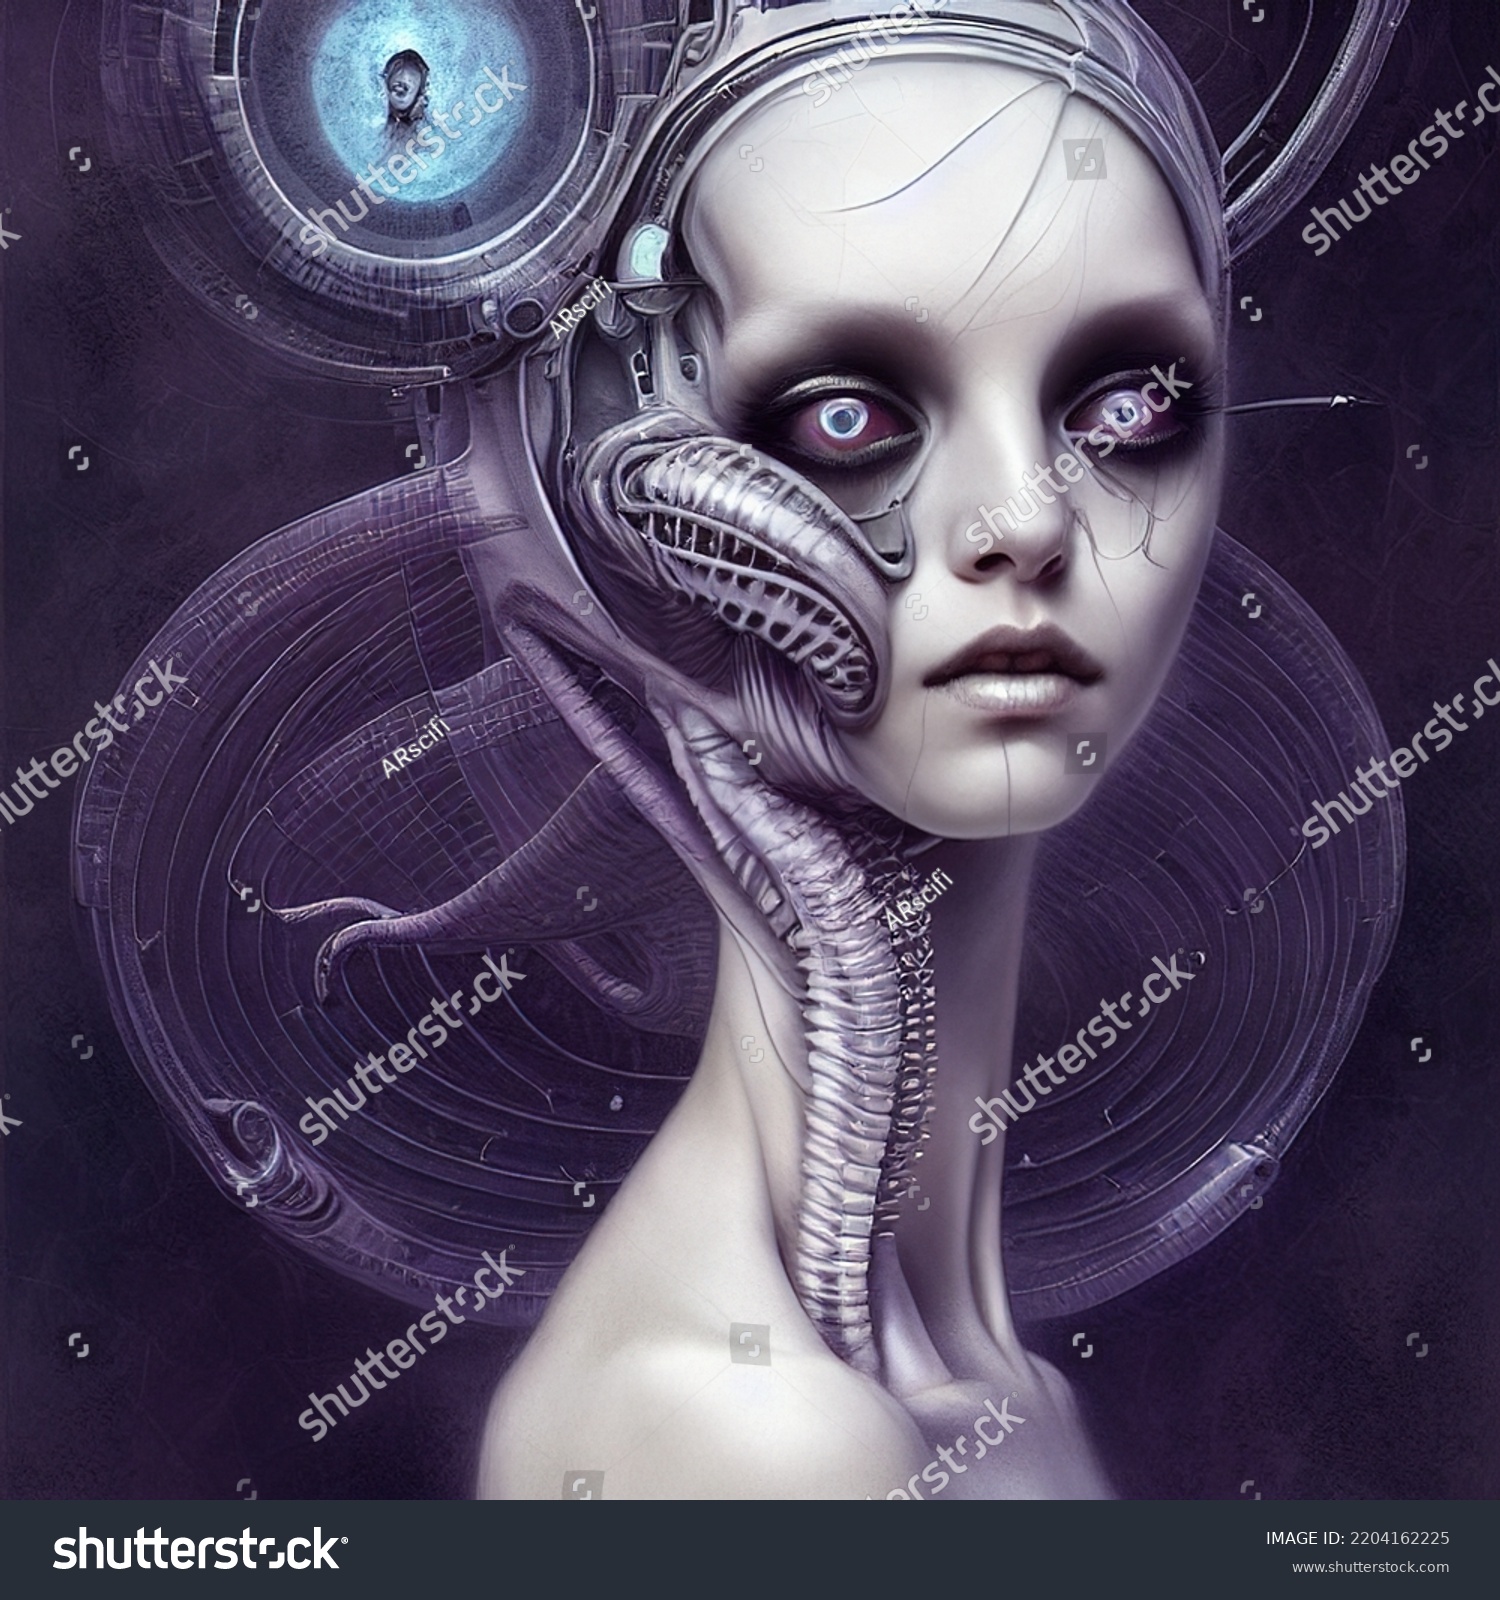 3d Rendering 3d Illustration Alien Humanoid Stock Illustration 2204162225 Shutterstock 7405